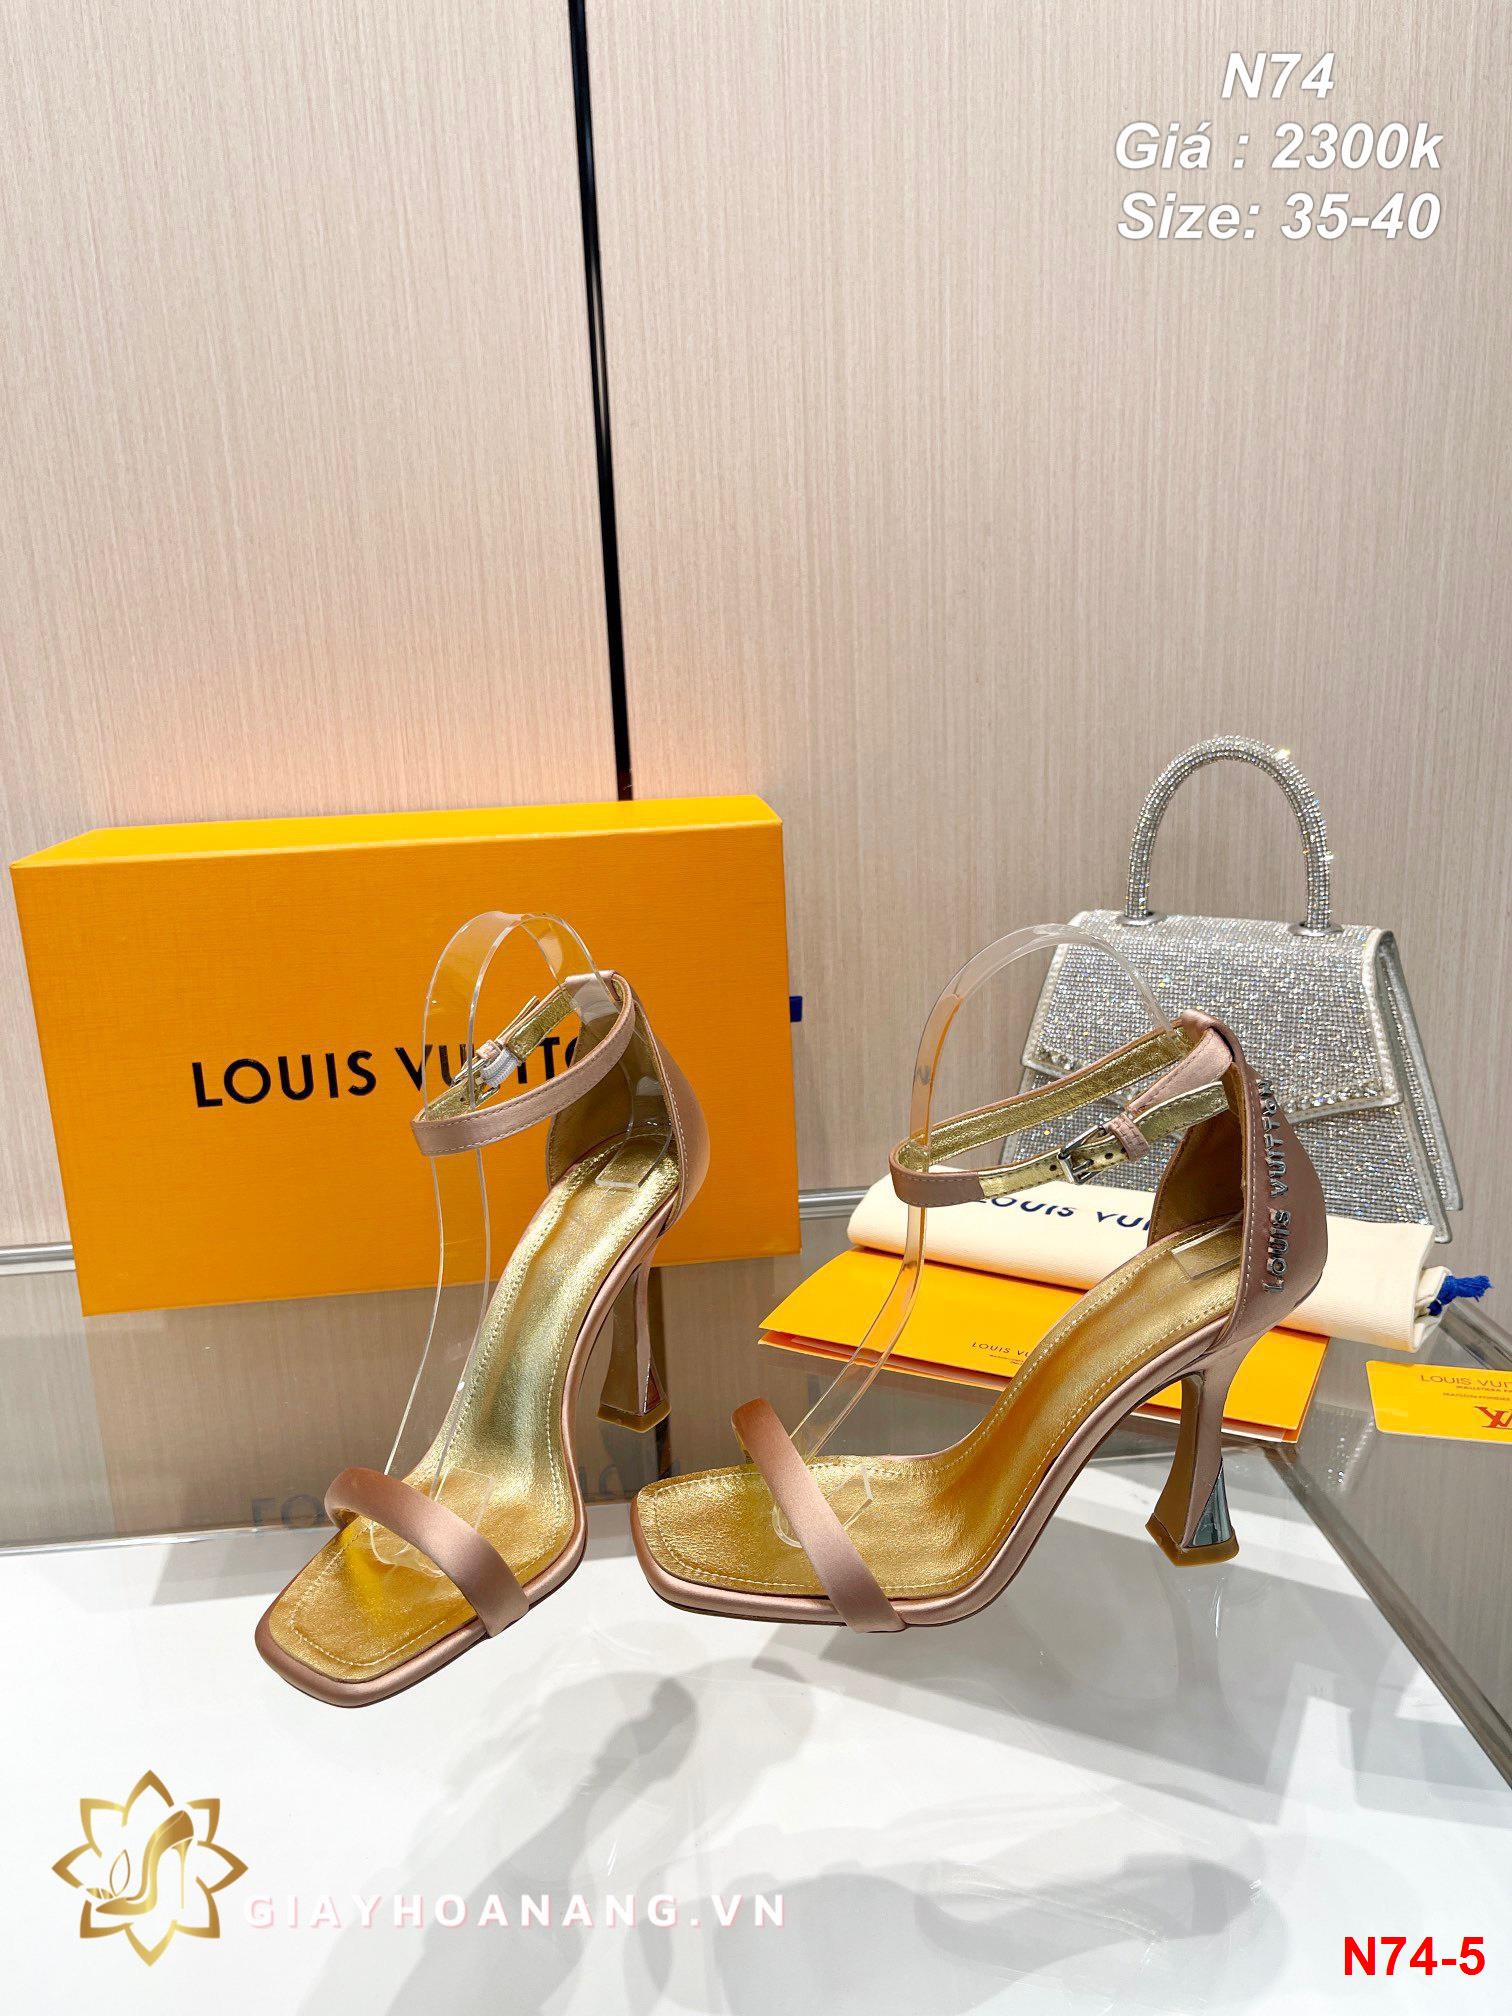 N74-5 Louis Vuitton sandal siêu cấp